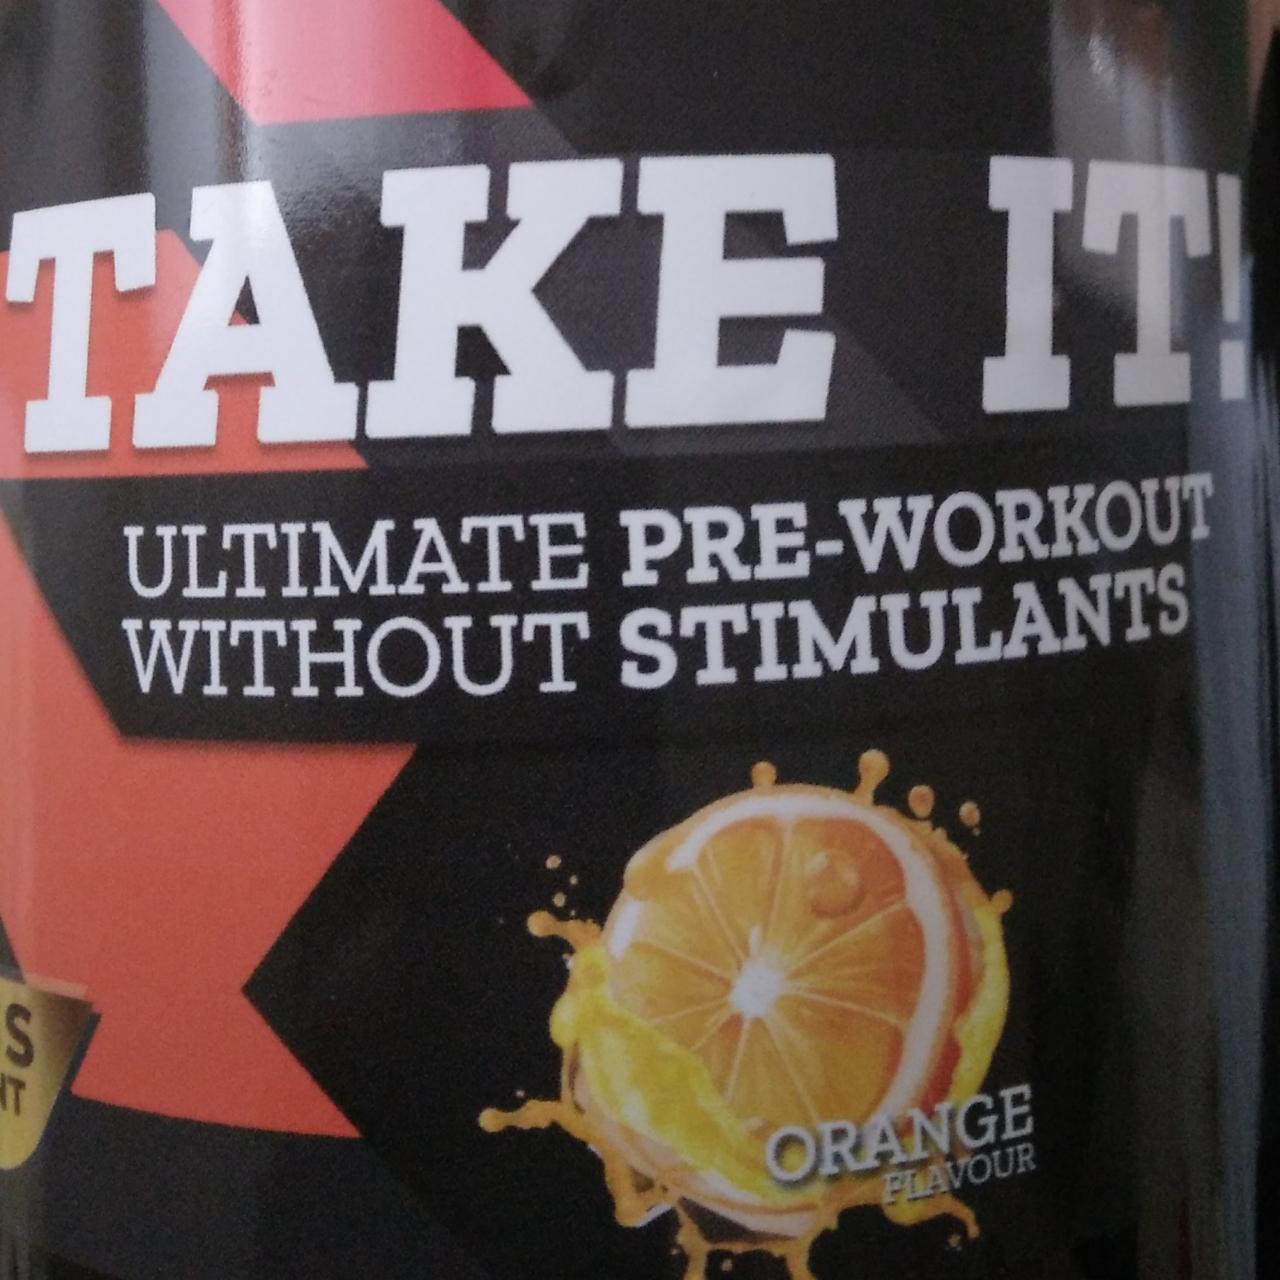 Fotografie - Ultimate Pre-Workout without Stimulants Orange flavour TAKE IT!